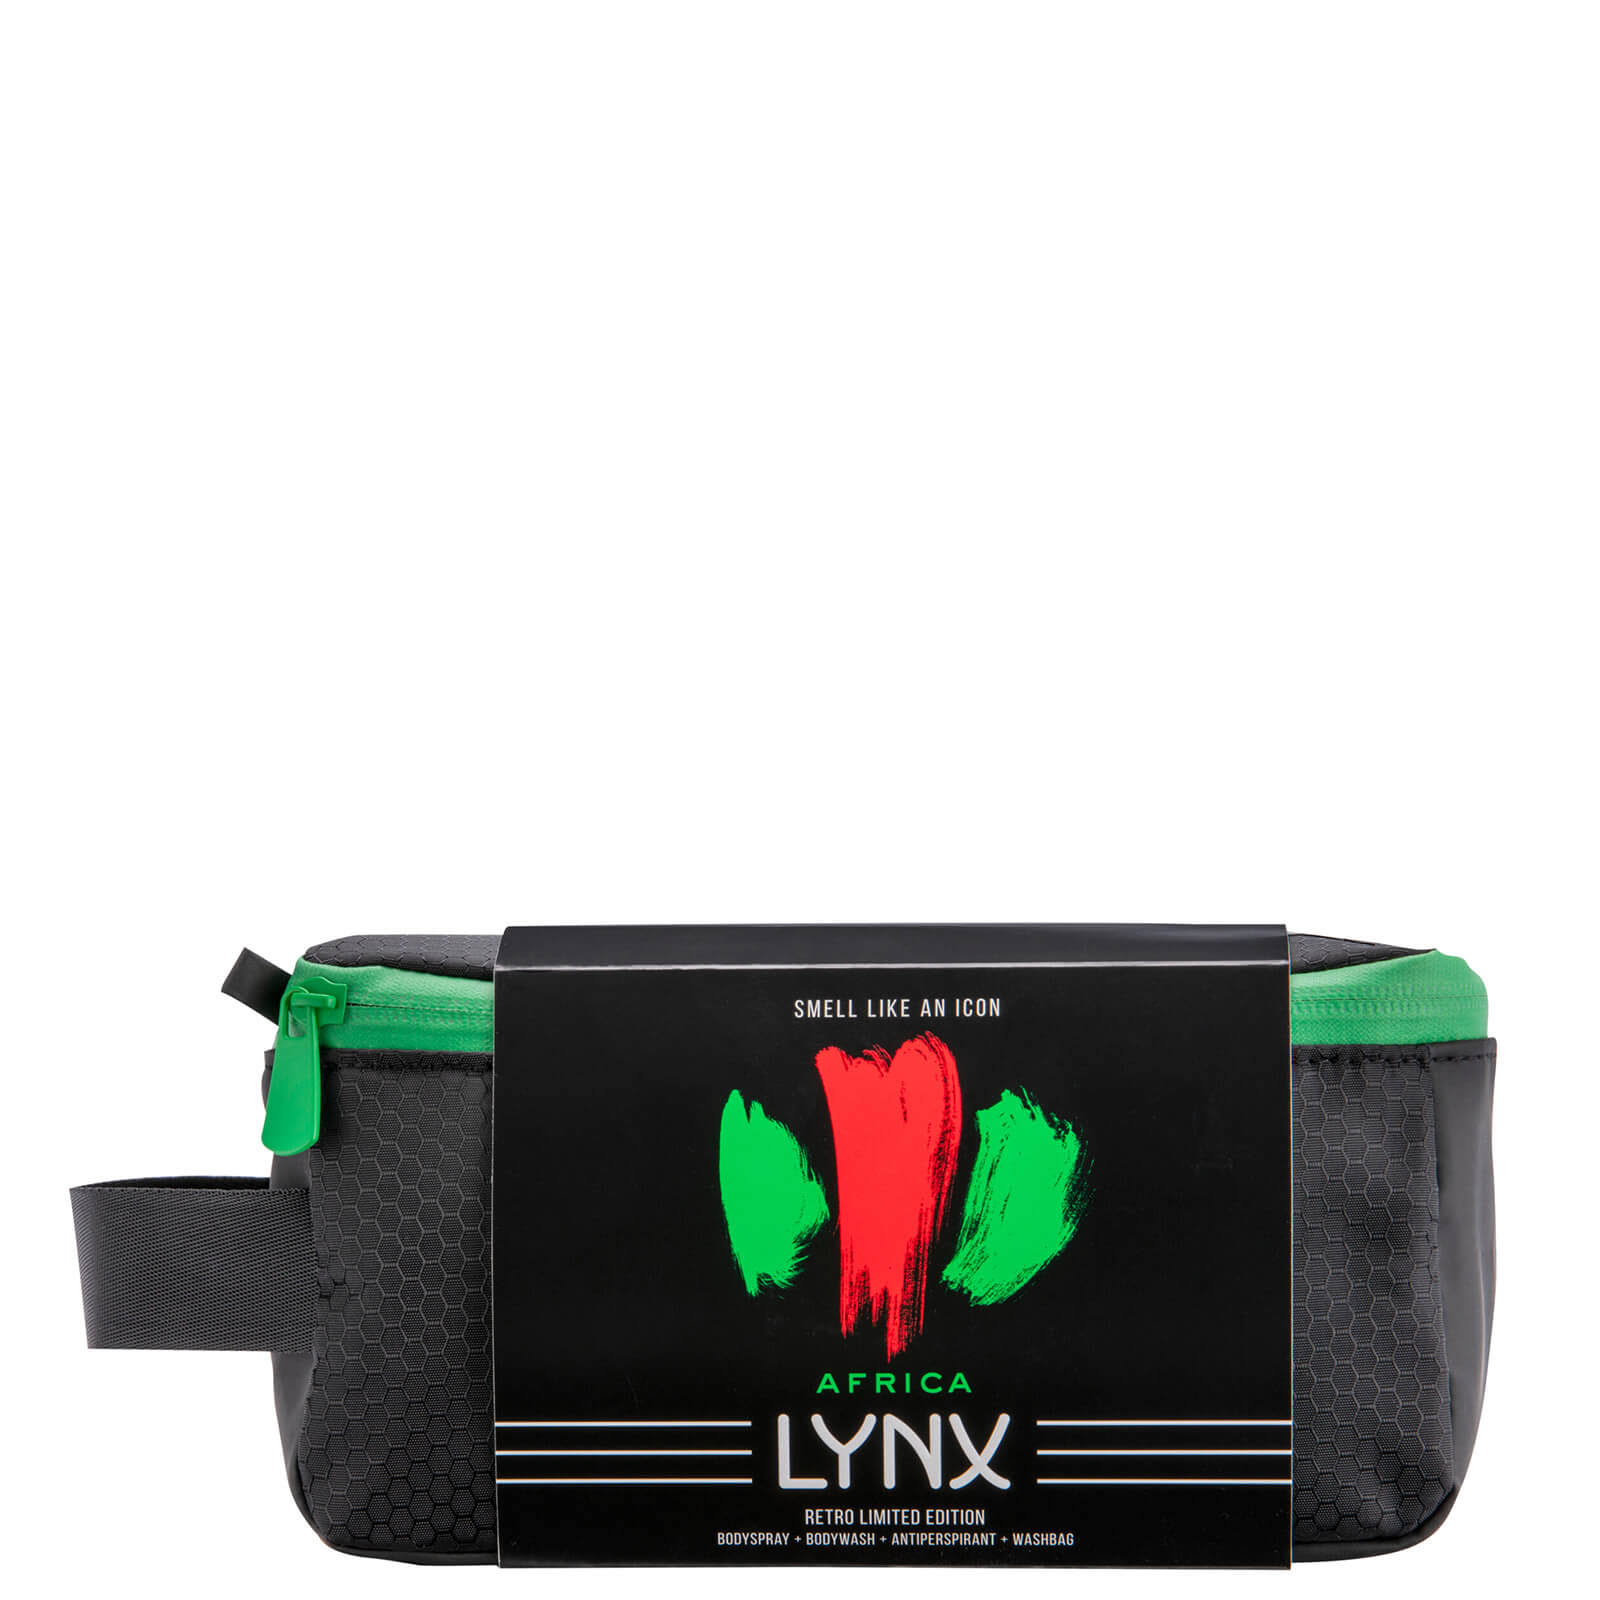 Lynx Africa Washbag Gift Set